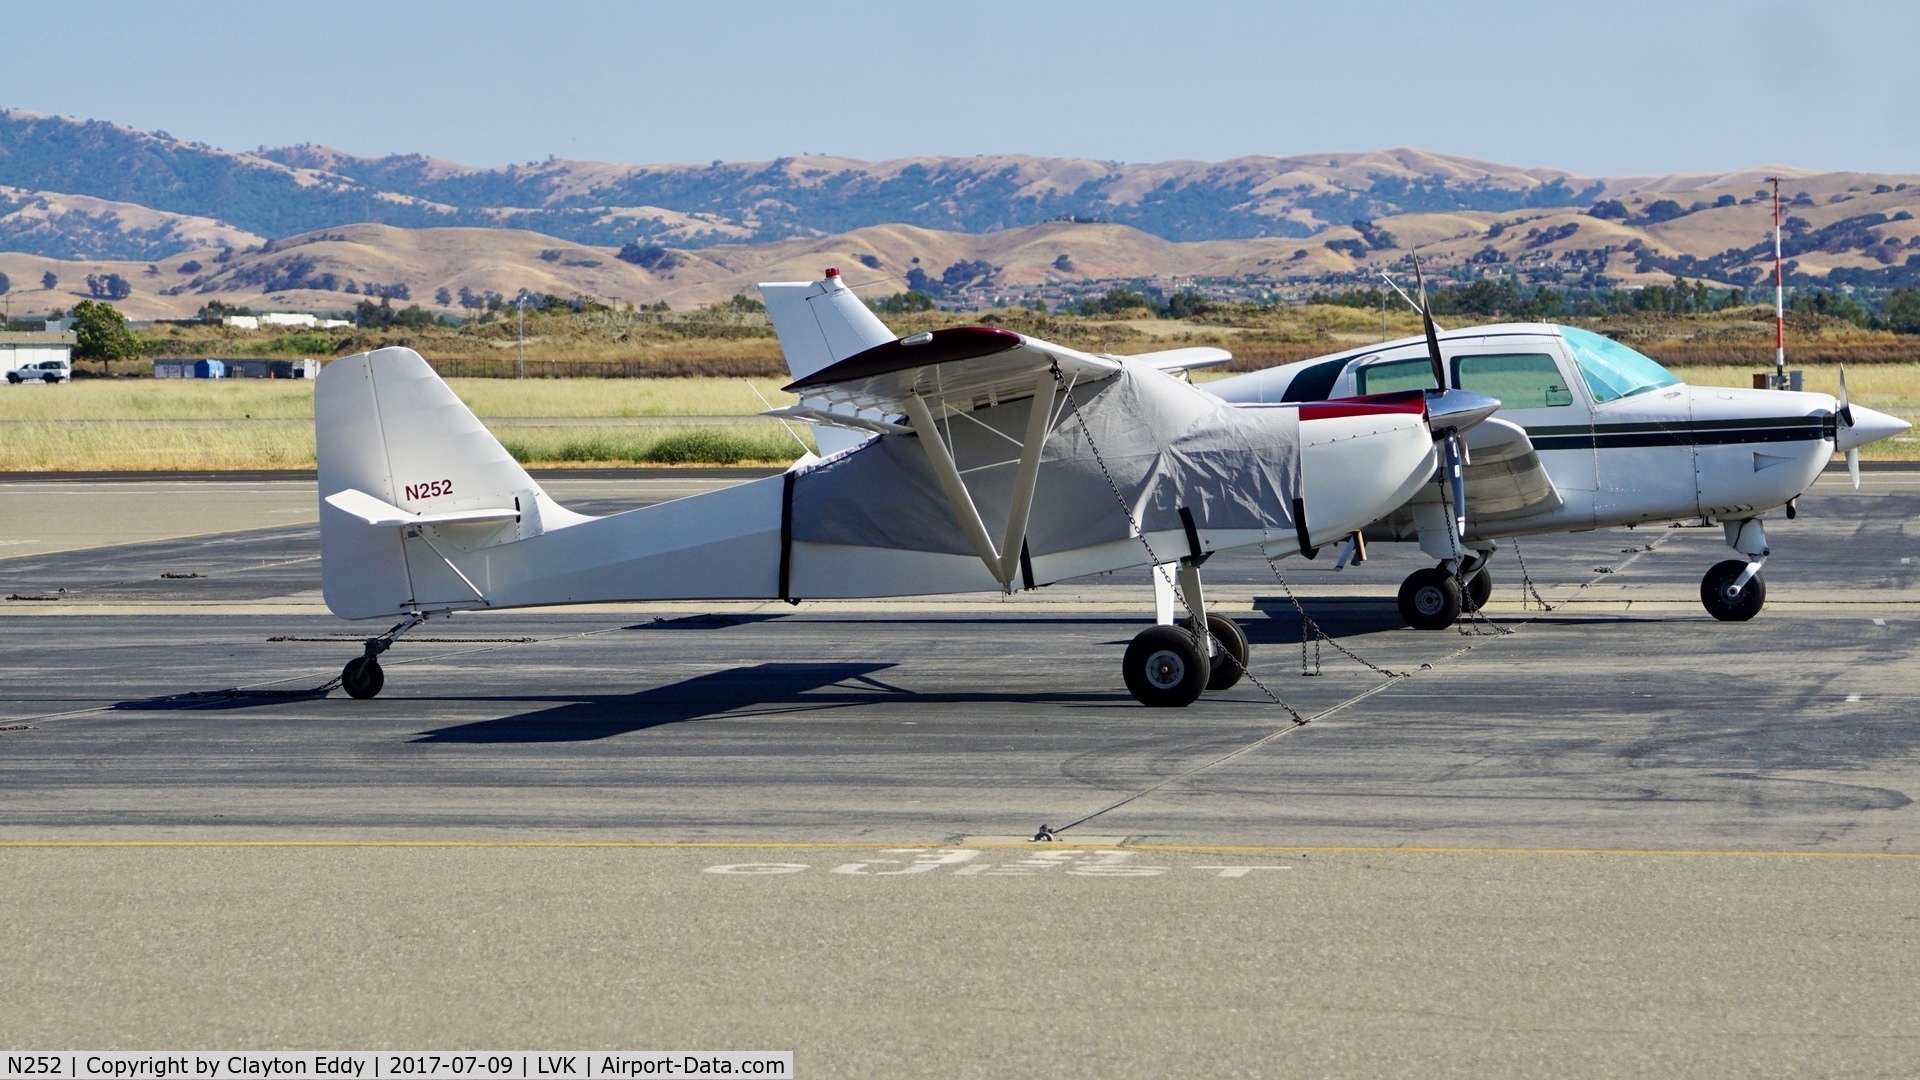 N252, 2005 Skystar Kitfox Series 6 C/N S60005-026, Livermore Airport California. 2017.